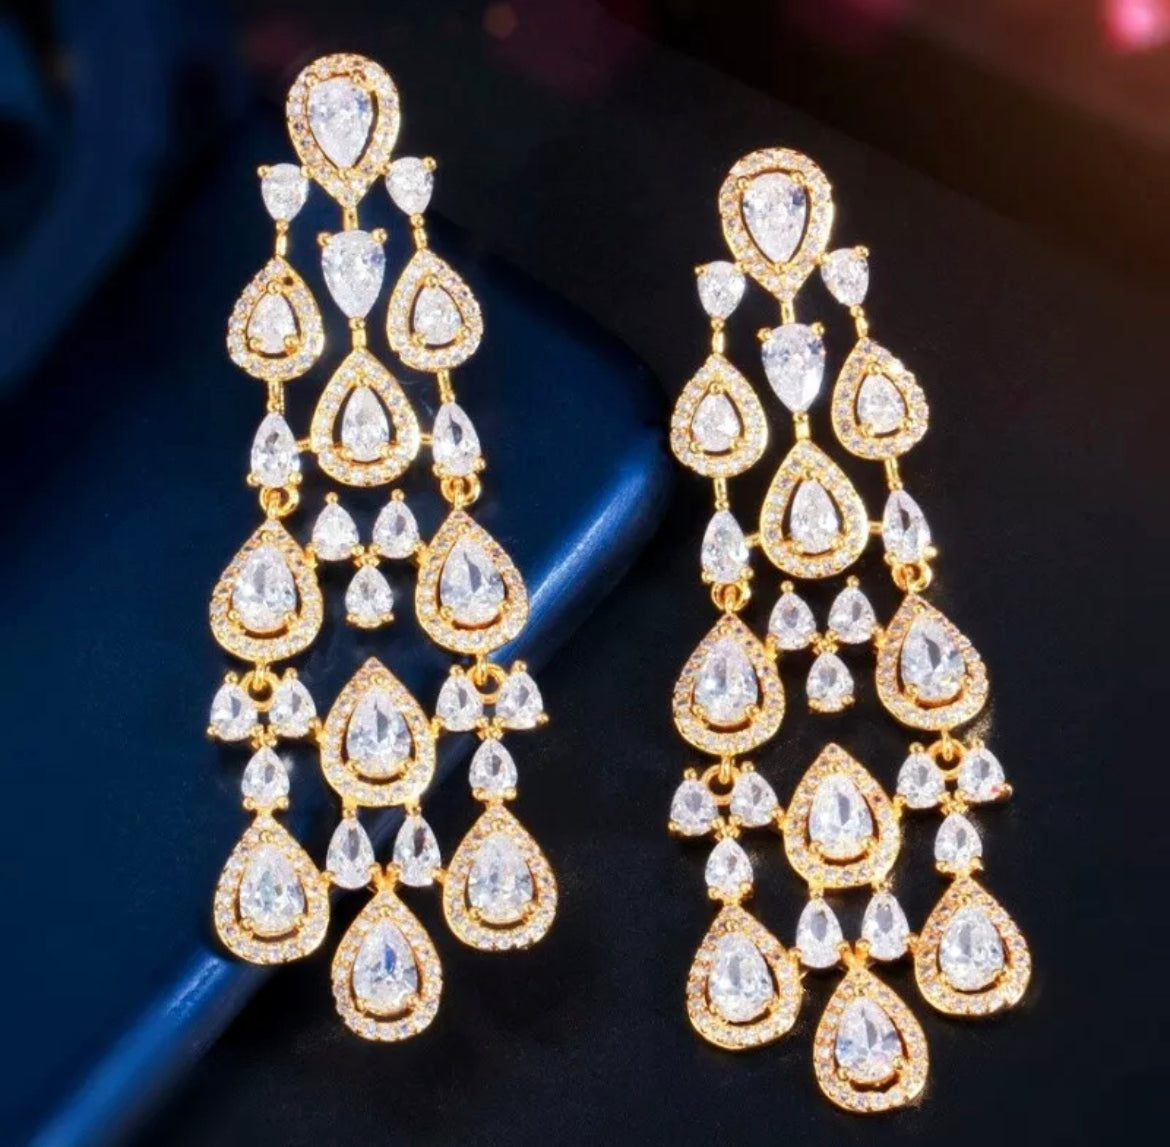 Azmina - Showstopping Swarovski Crystal Chandelier Drop Earrings - Set in 18k gold vermeil